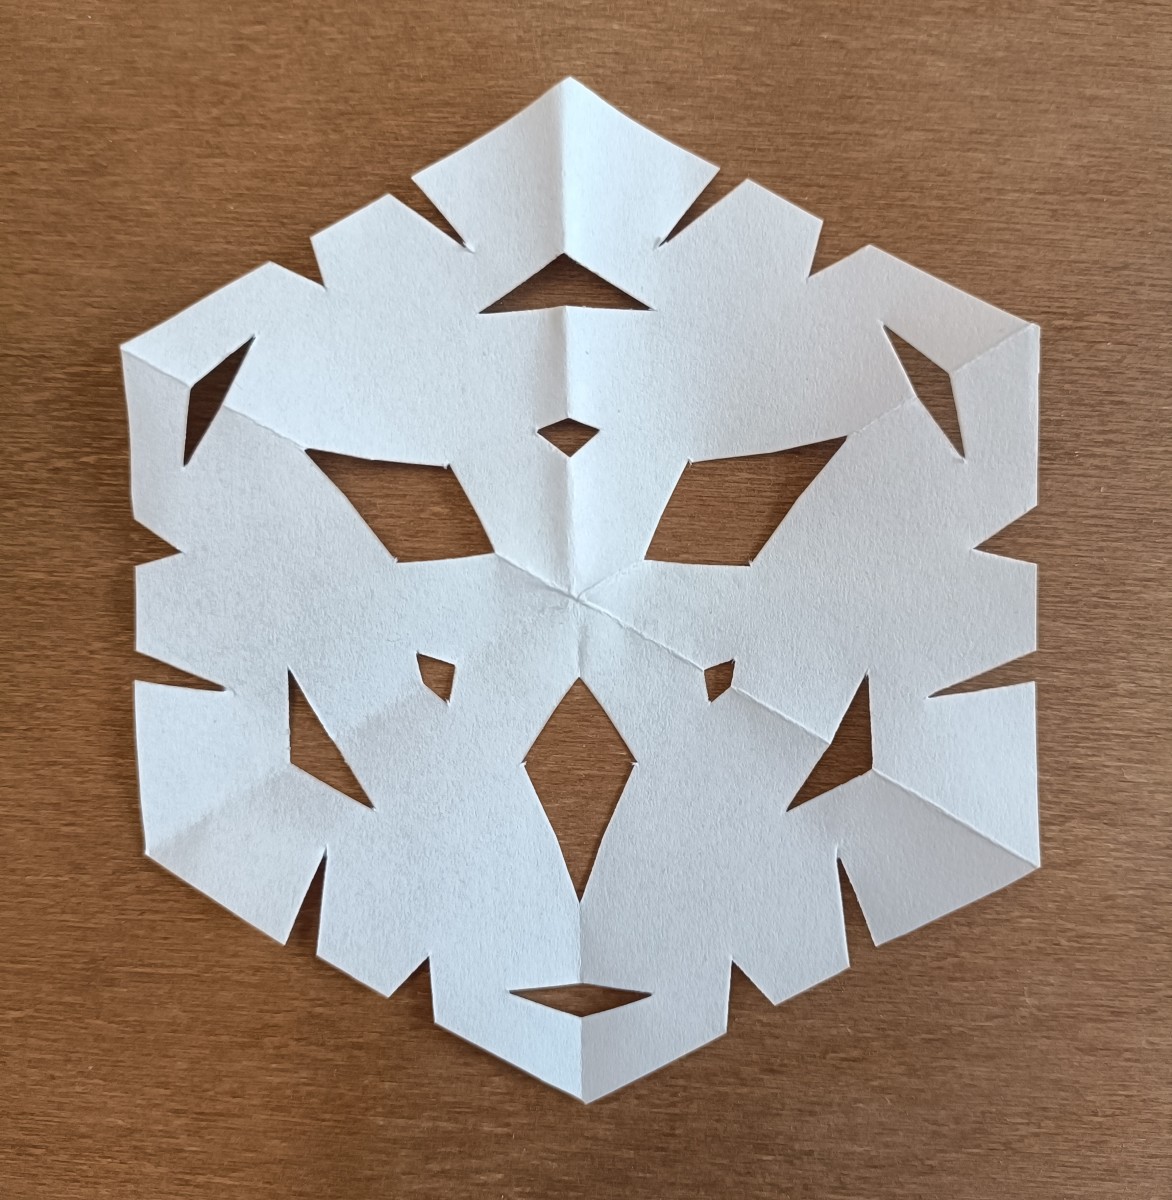 6 Ways with Snowflakes… 3D Snowflakes